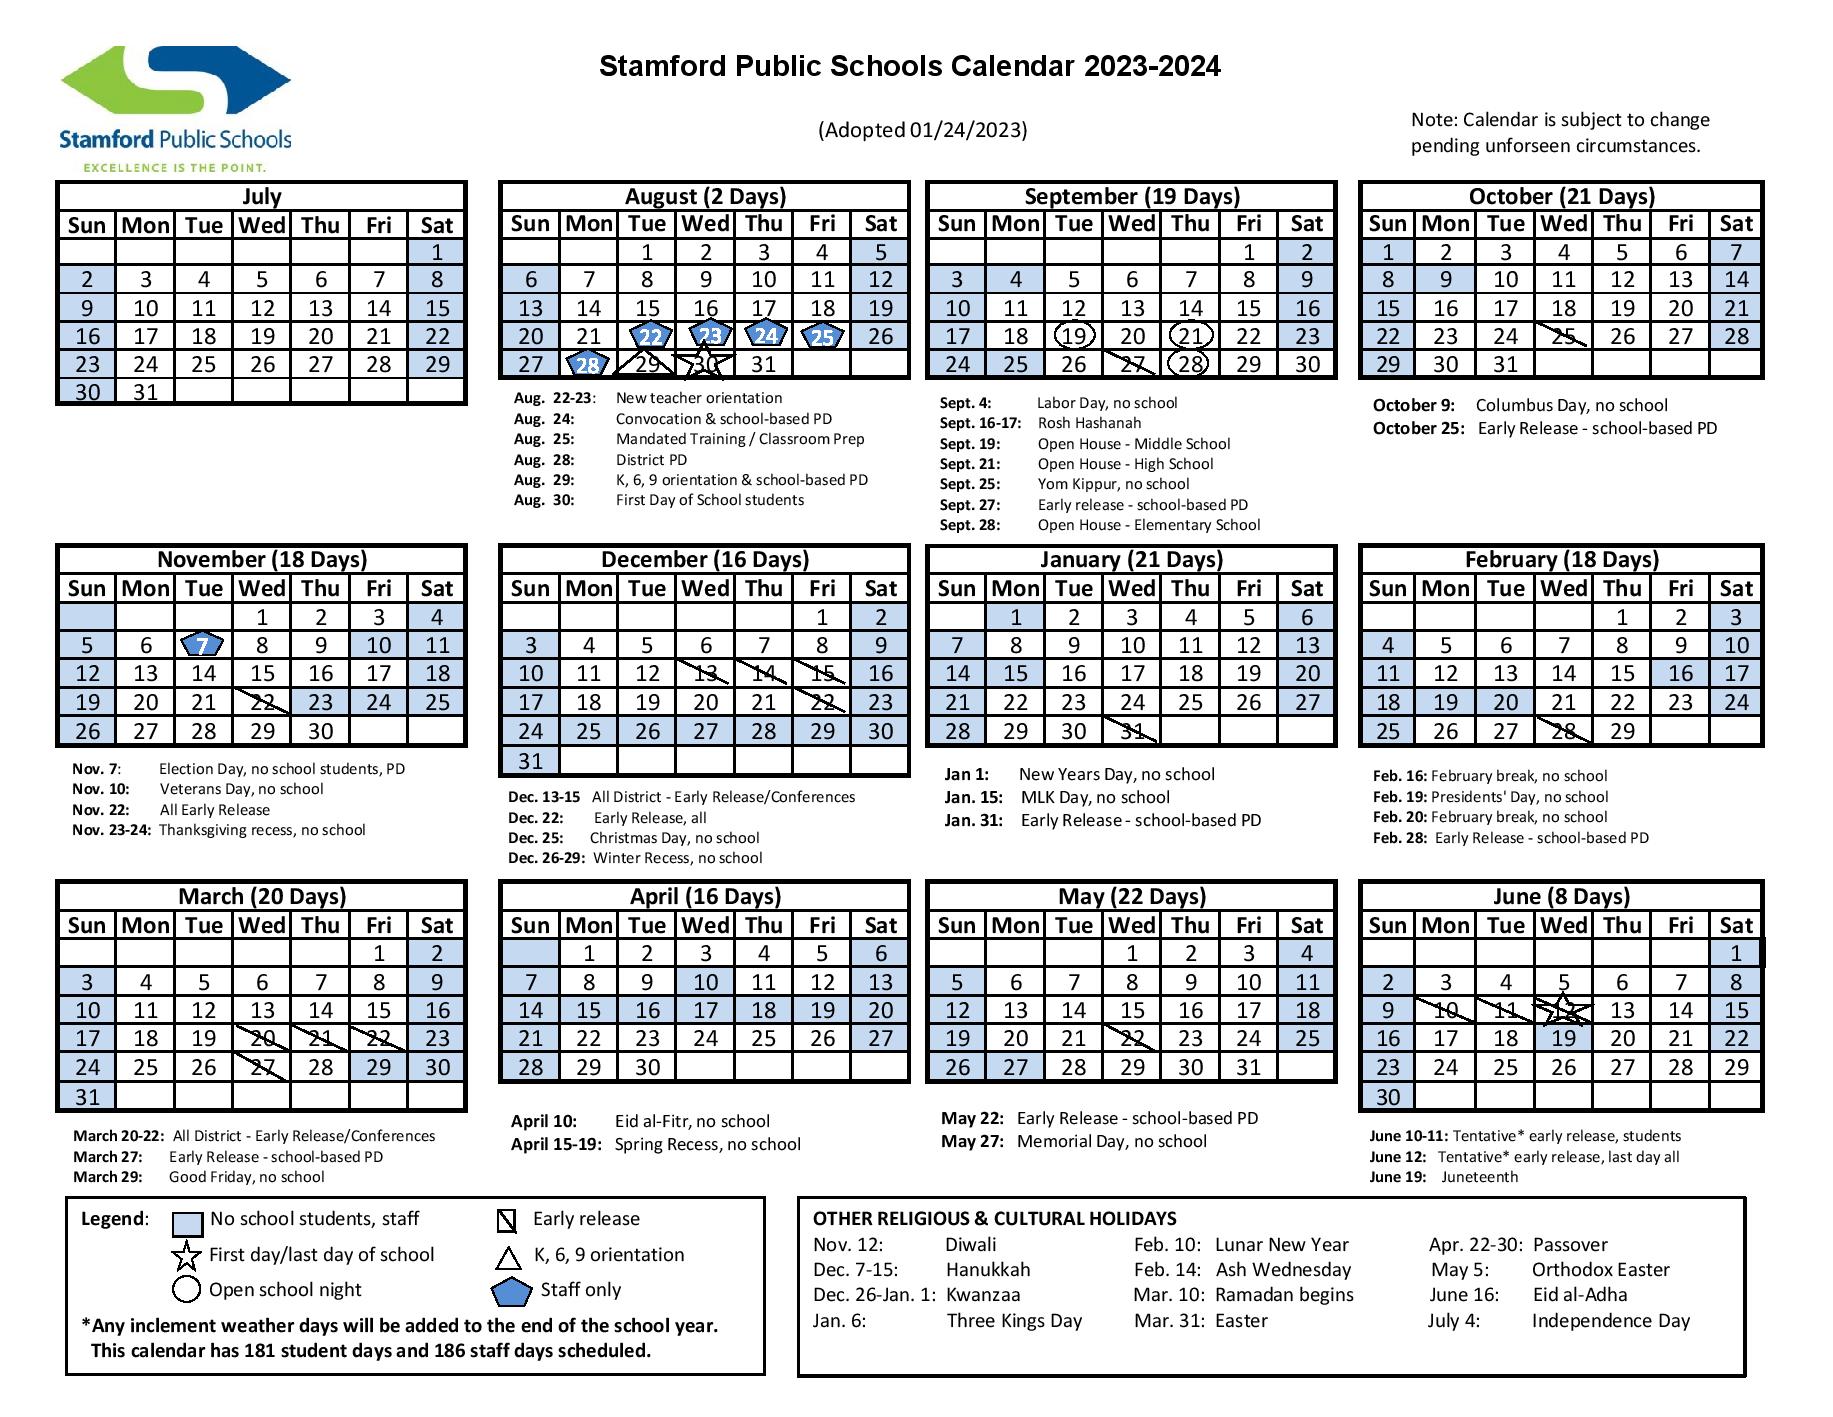 Stamford Public Schools Calendars 